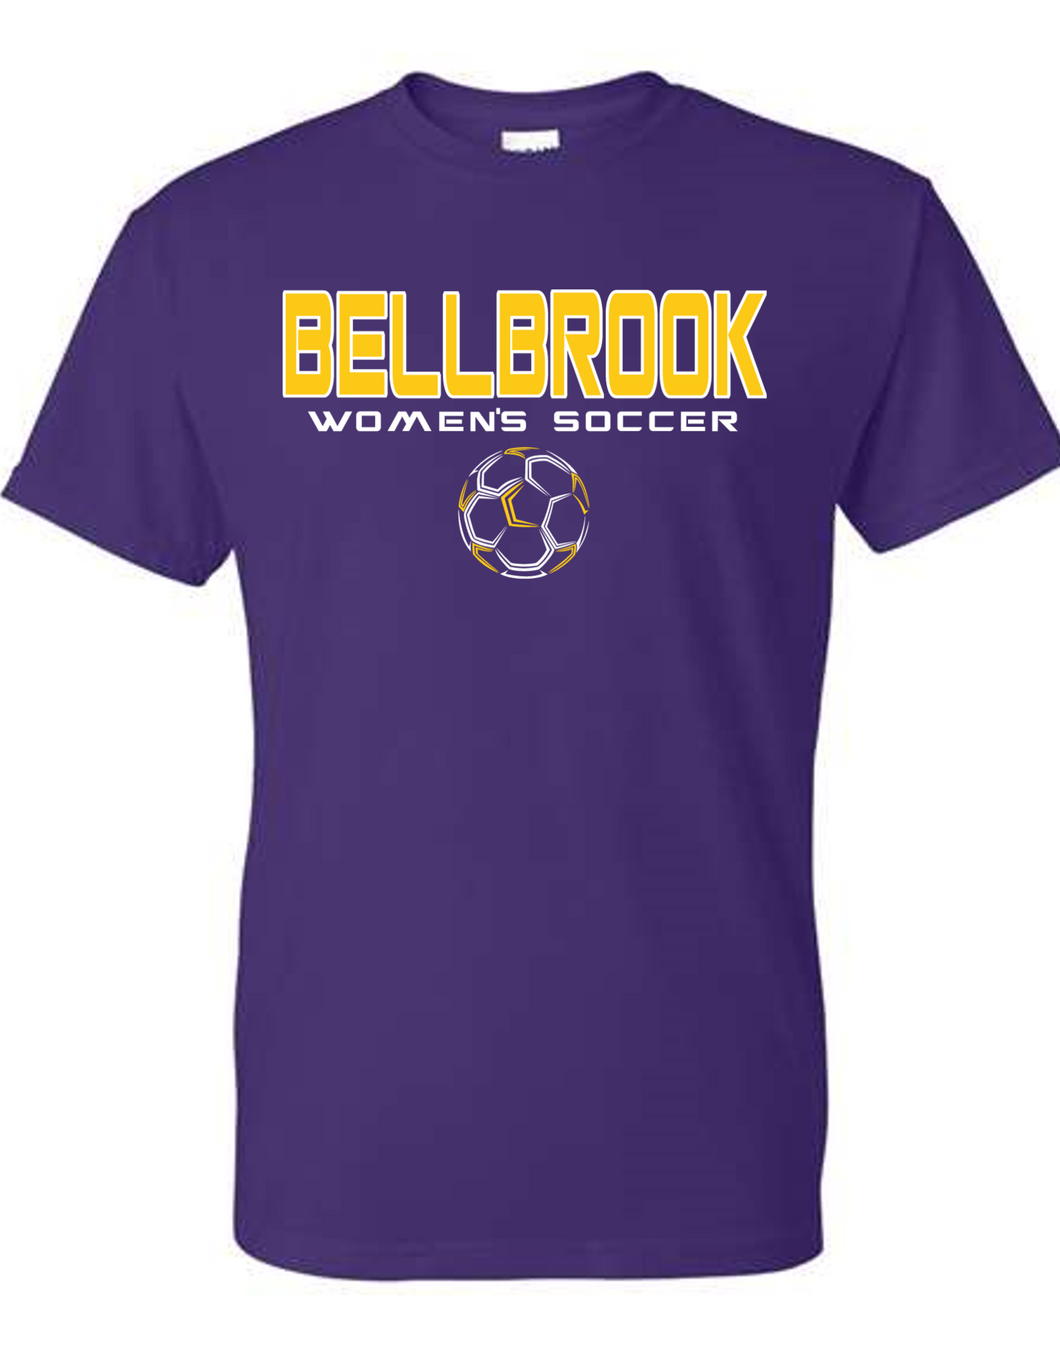 BHS Women's Soccer Purple 50/50 T-Shirt